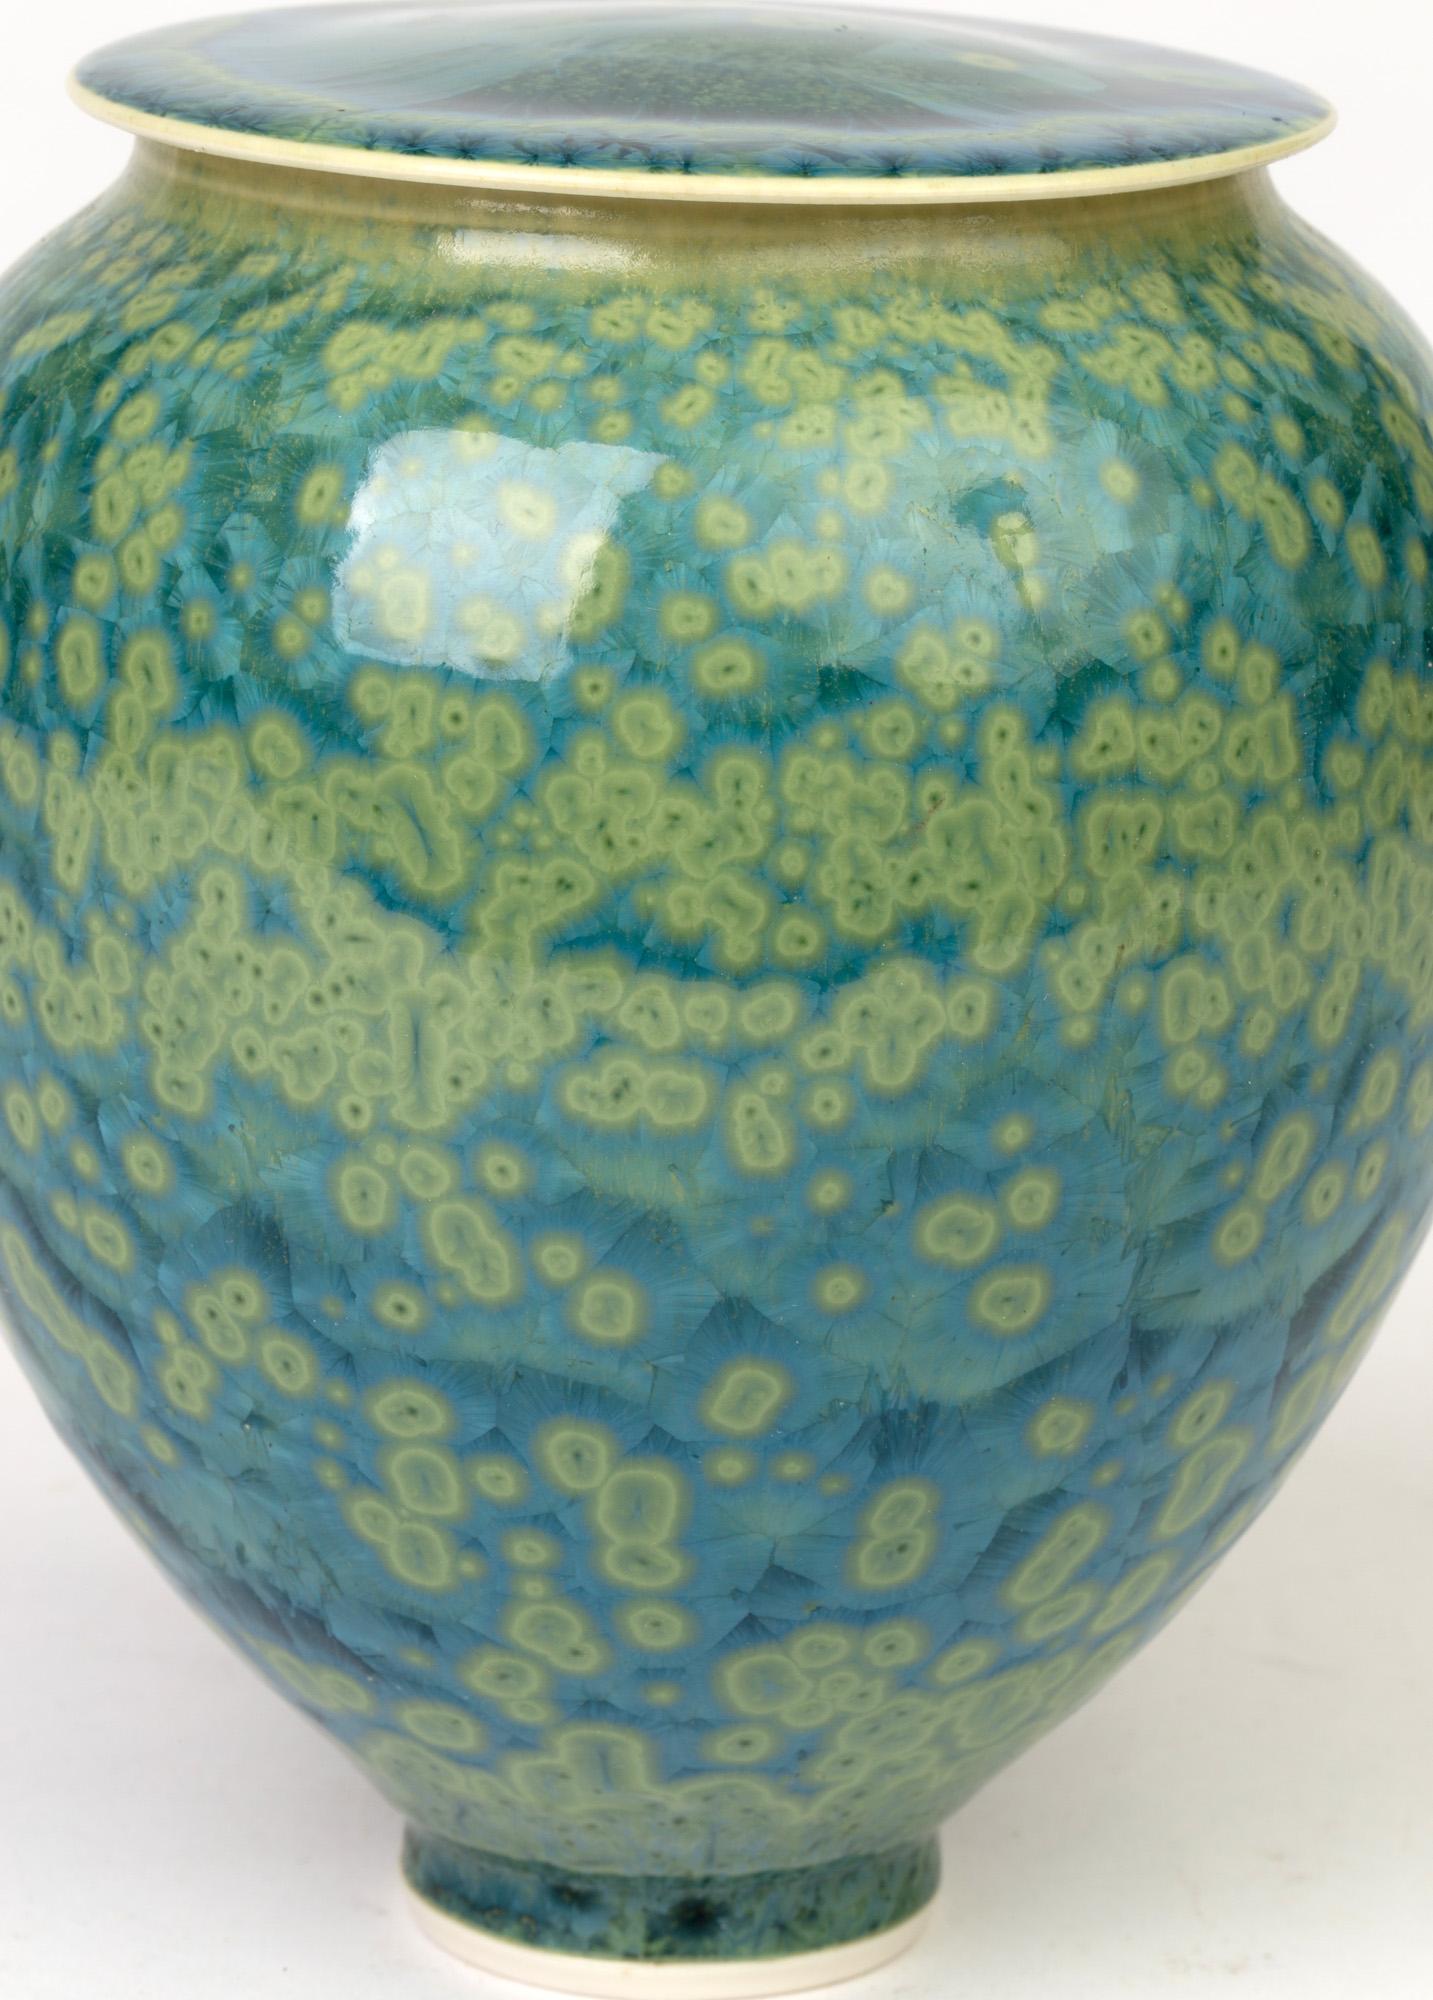 Studio Pottery Crystalline Glazed Porcelain Lidded Vessel 2